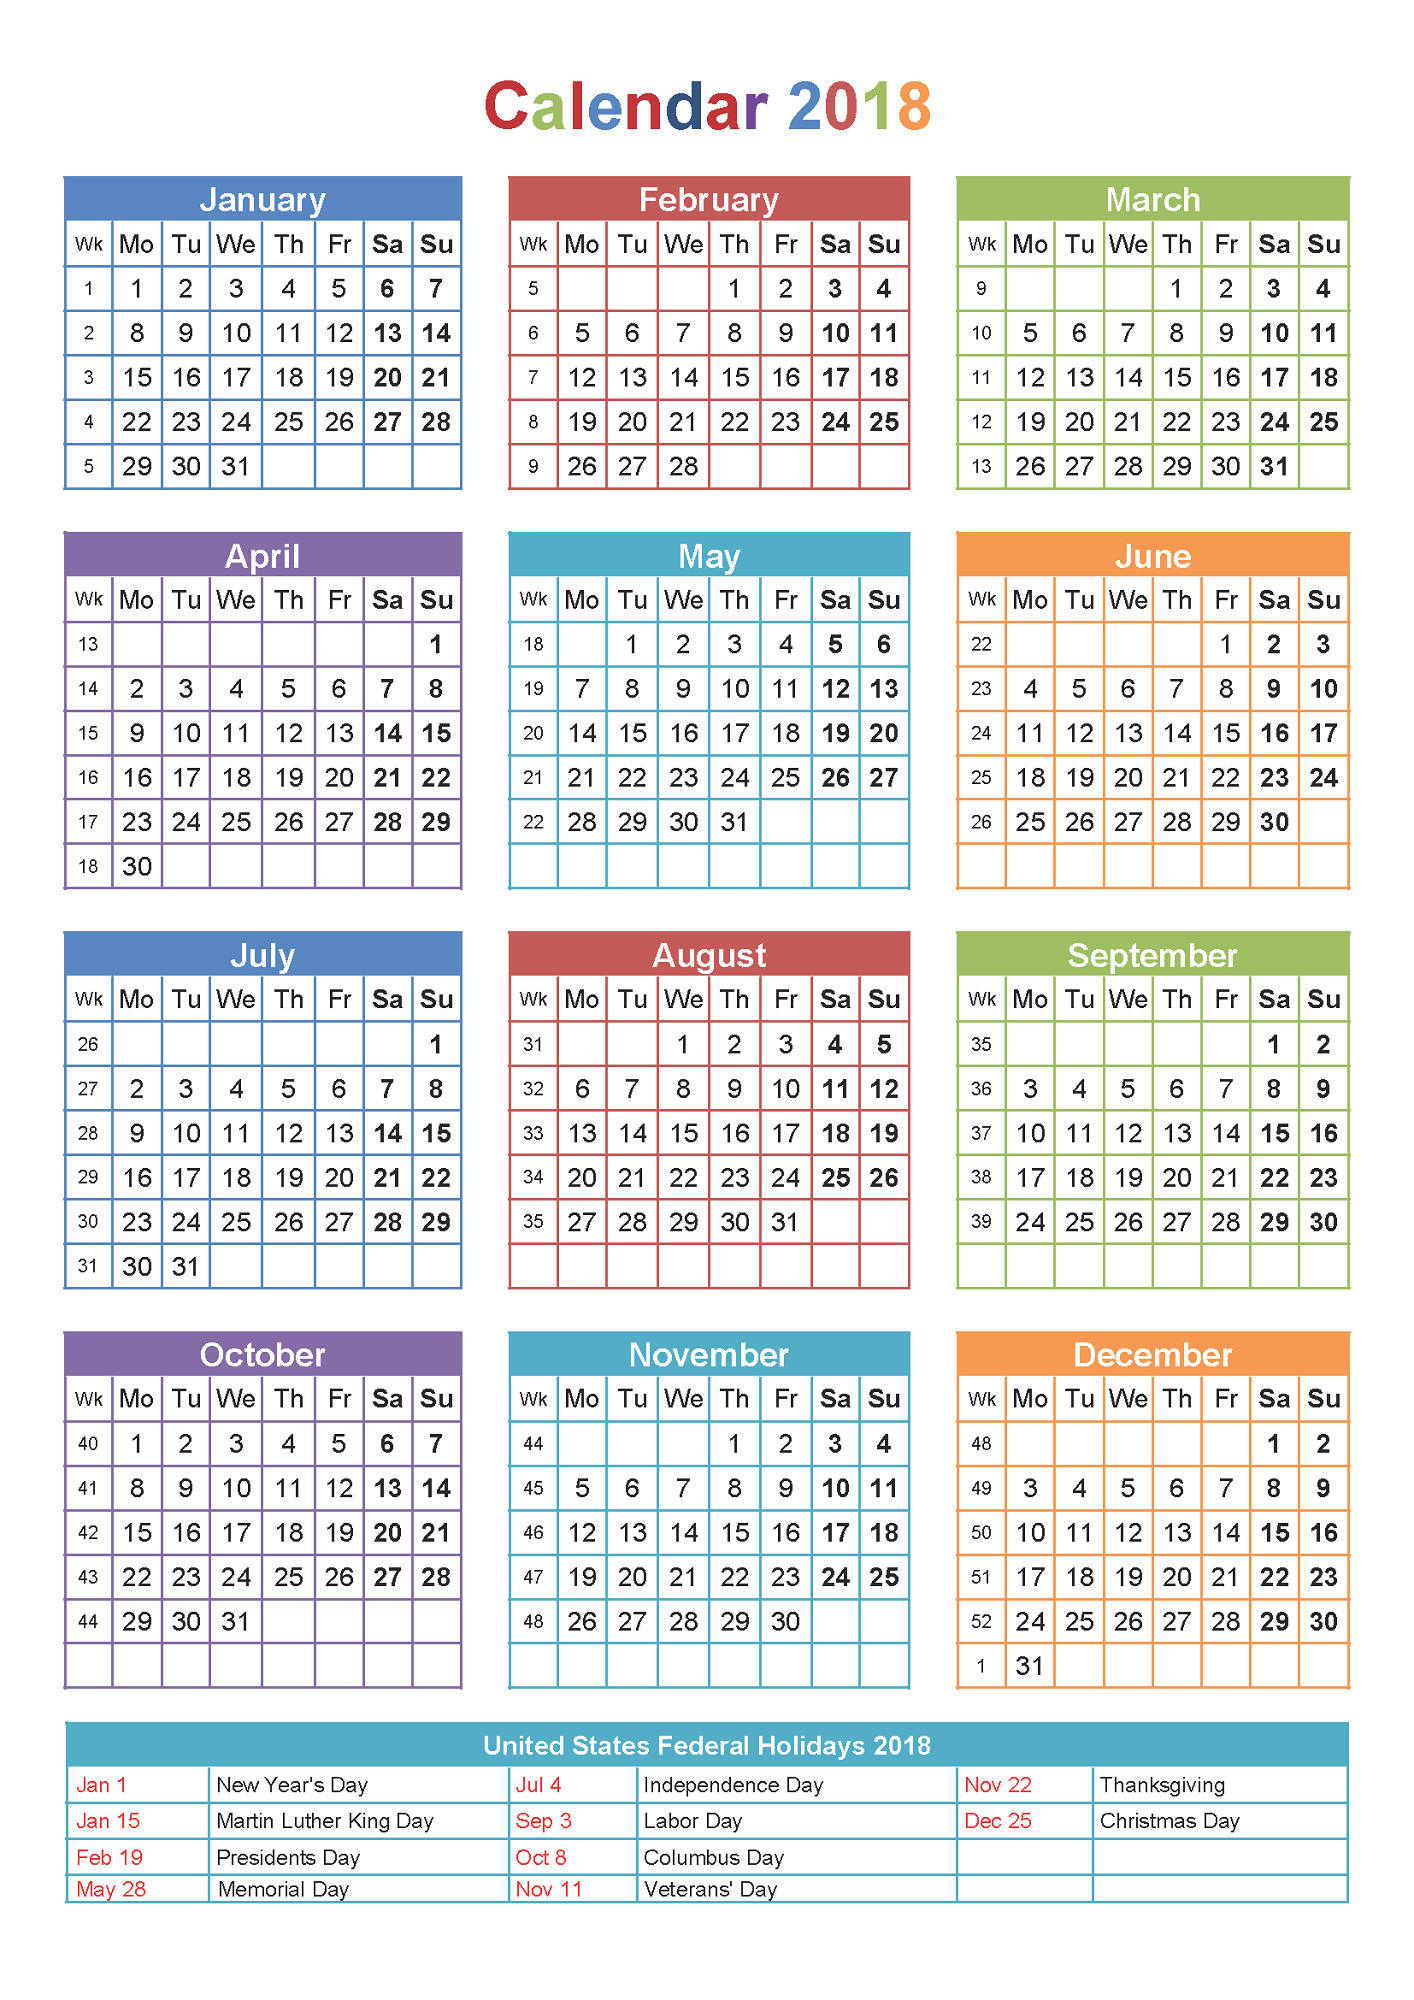 Desktop Wallpapers Calendar March 2018 44 images